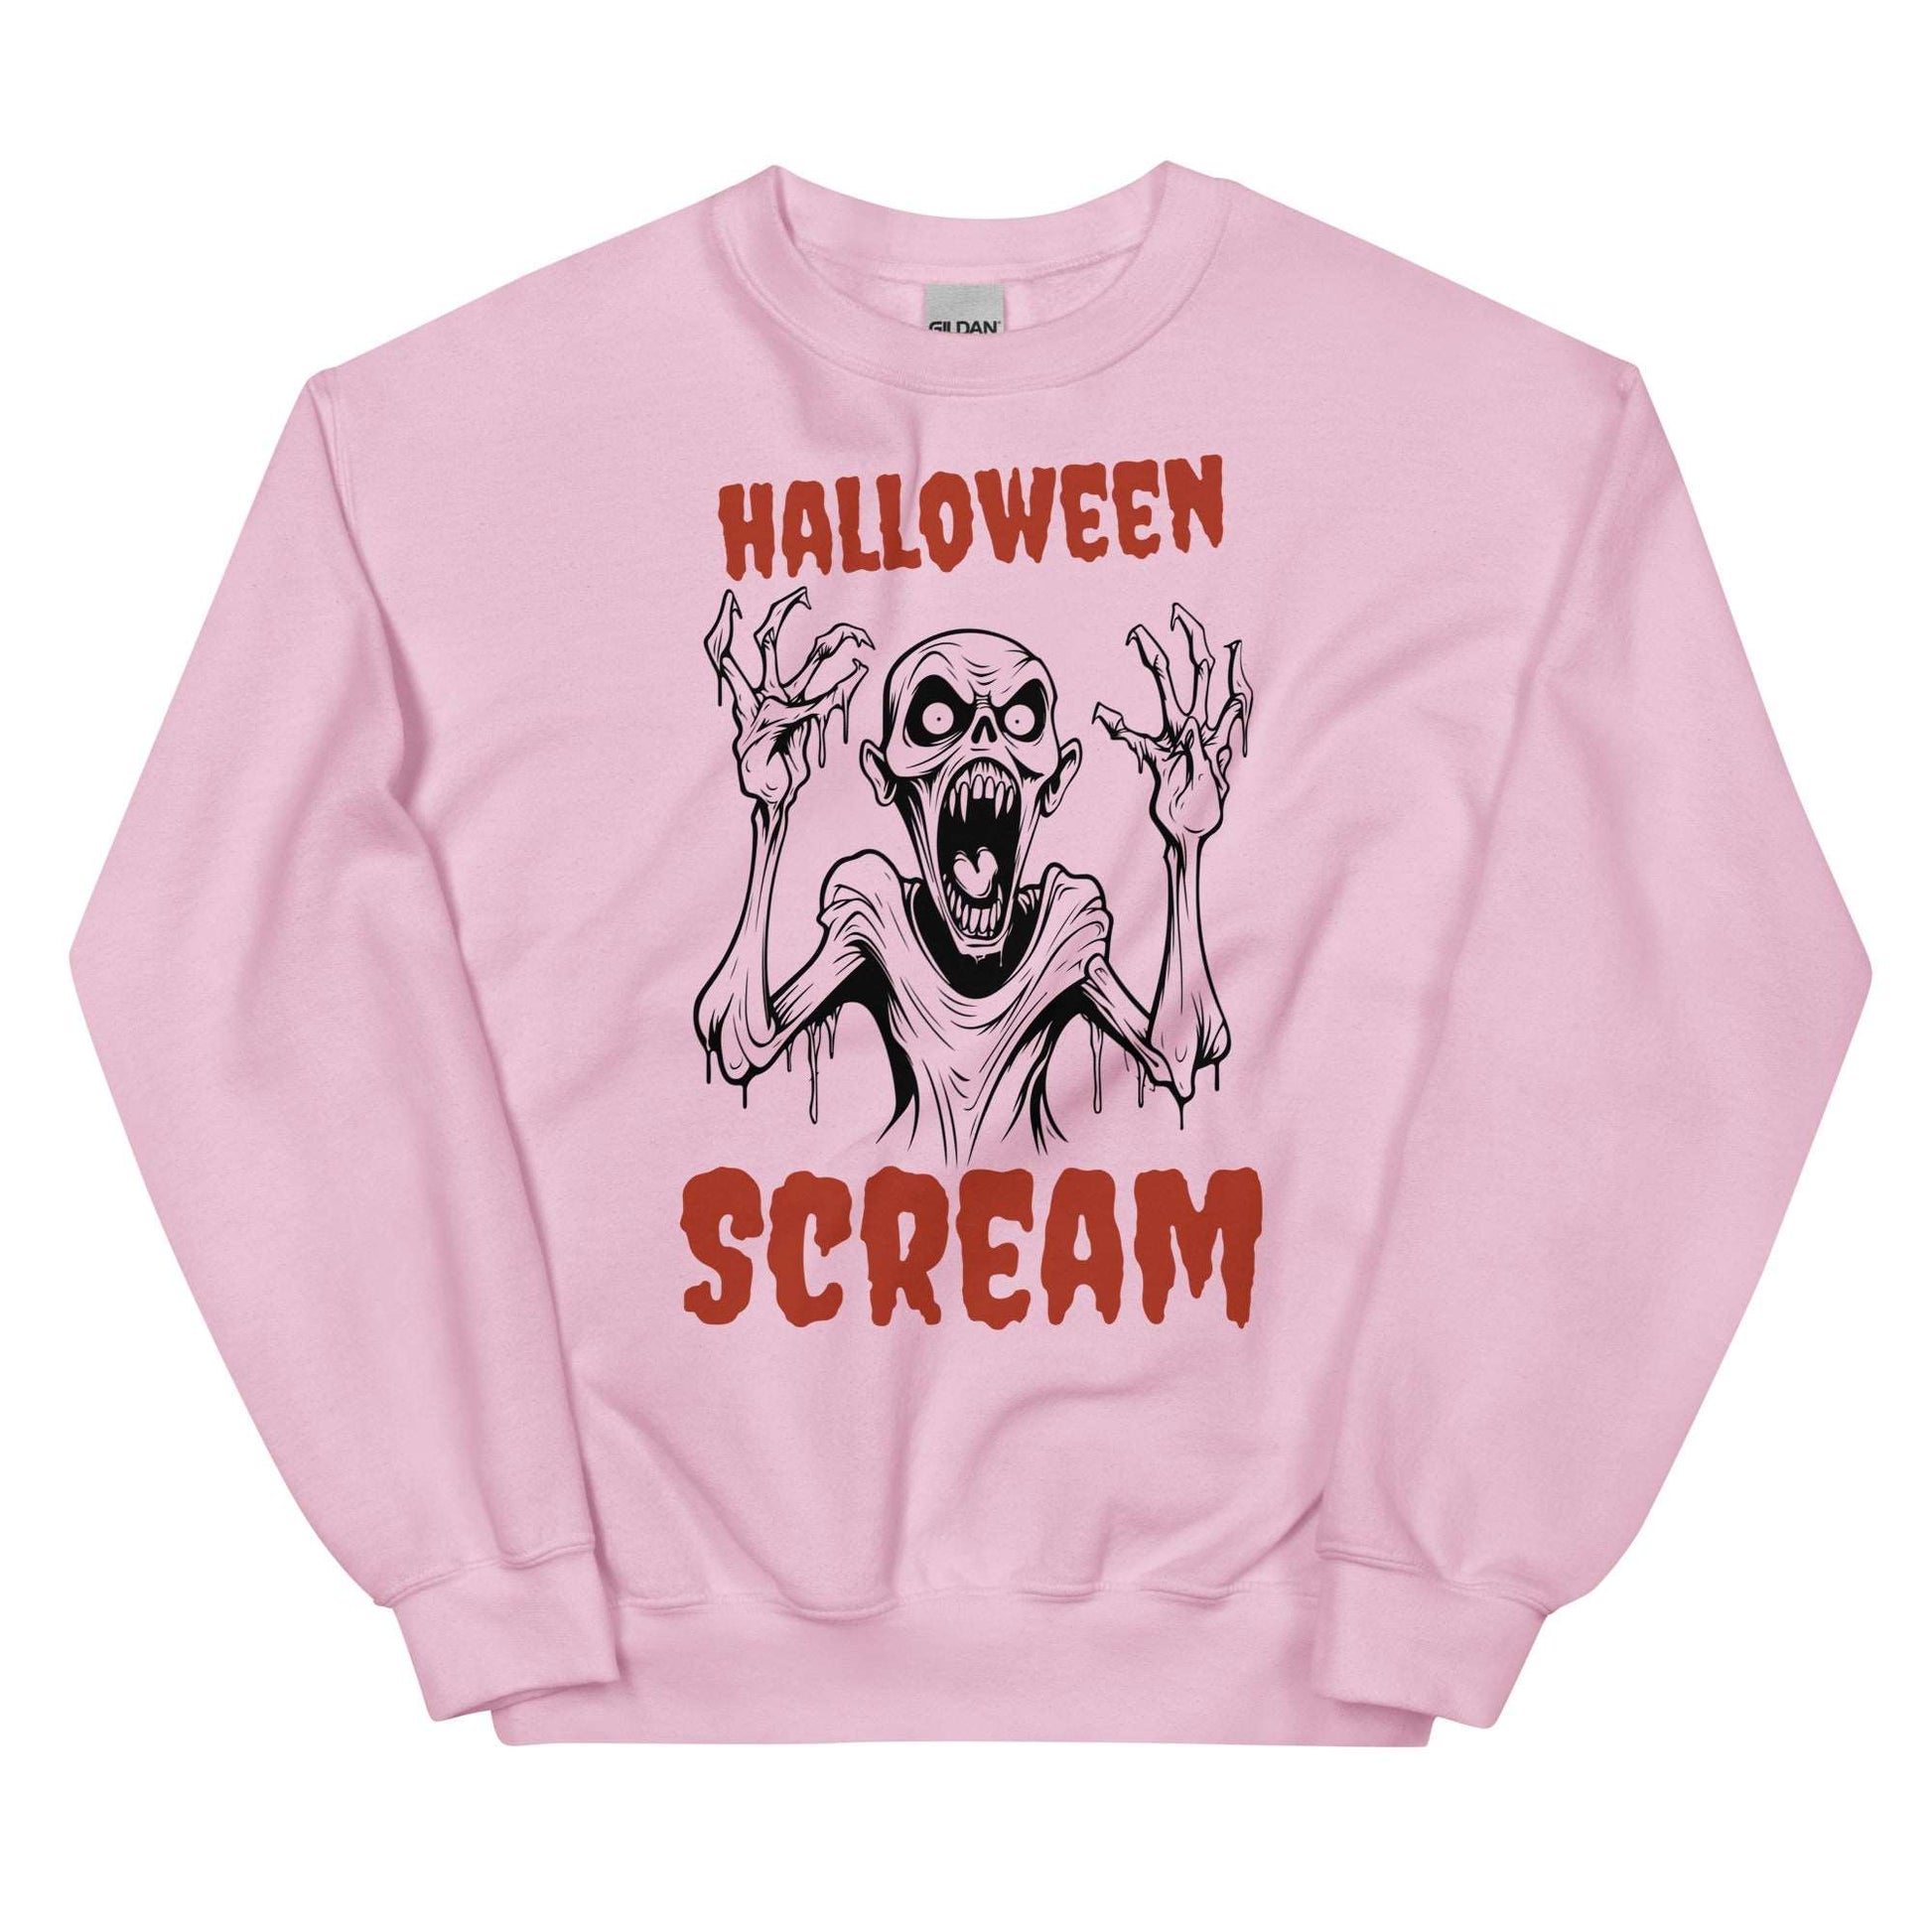 HALLOWEEN SCREAM - Unisex Sweatshirt